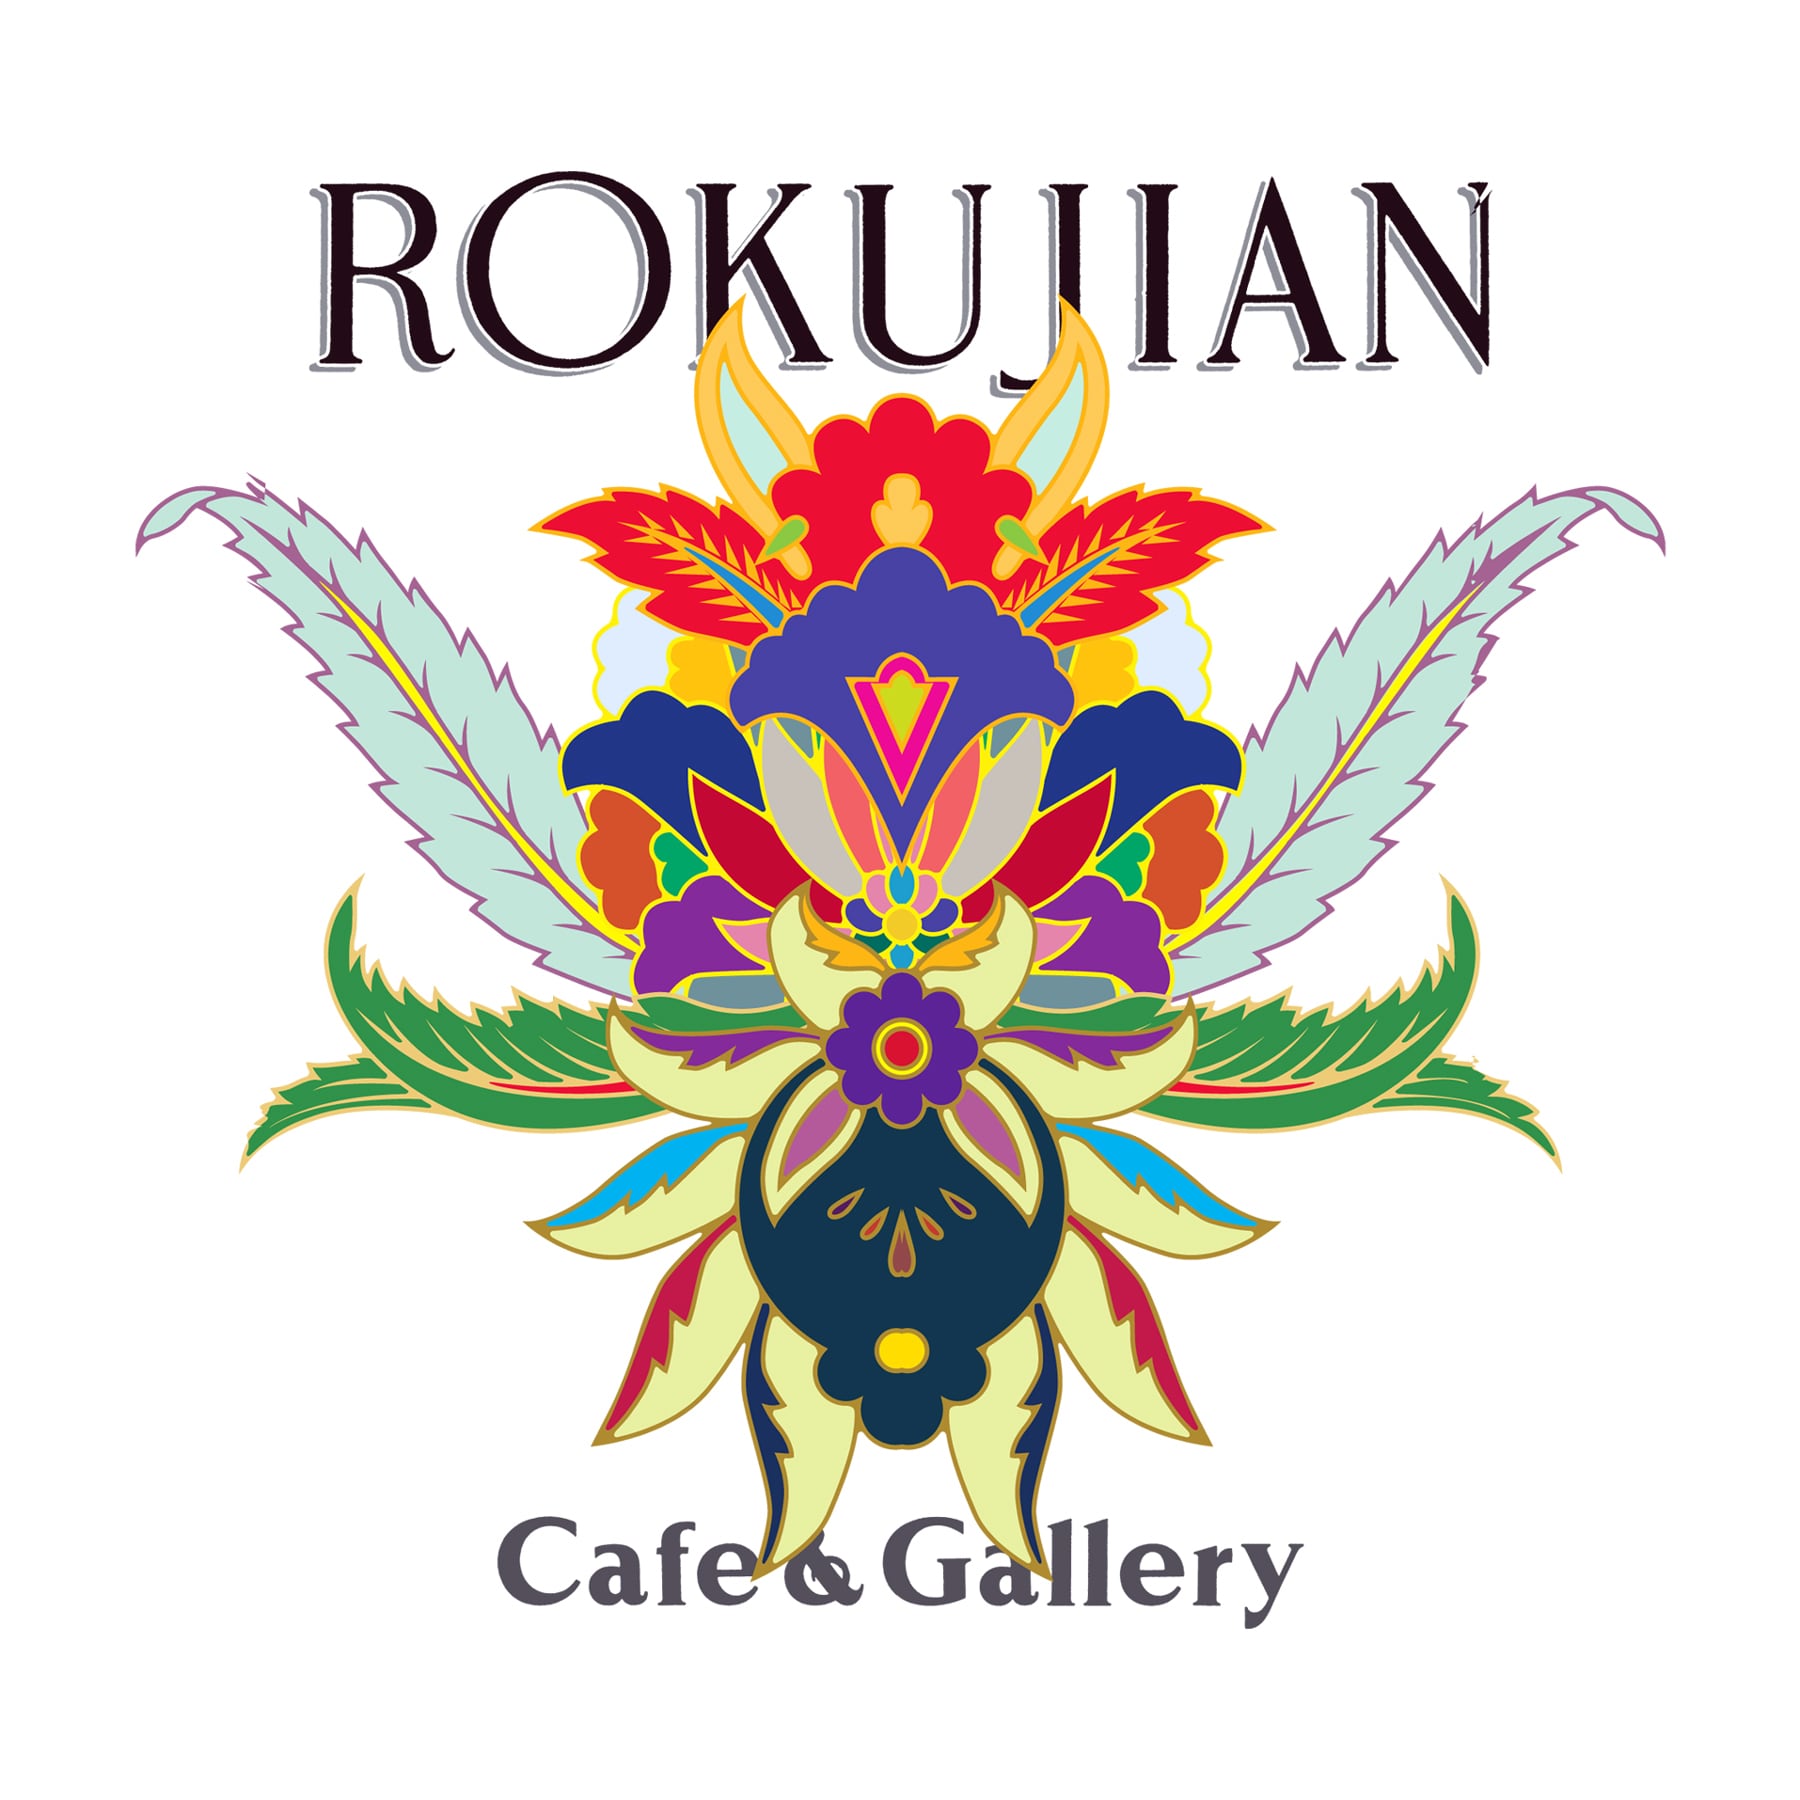 Cafe & Gallery Rokujian